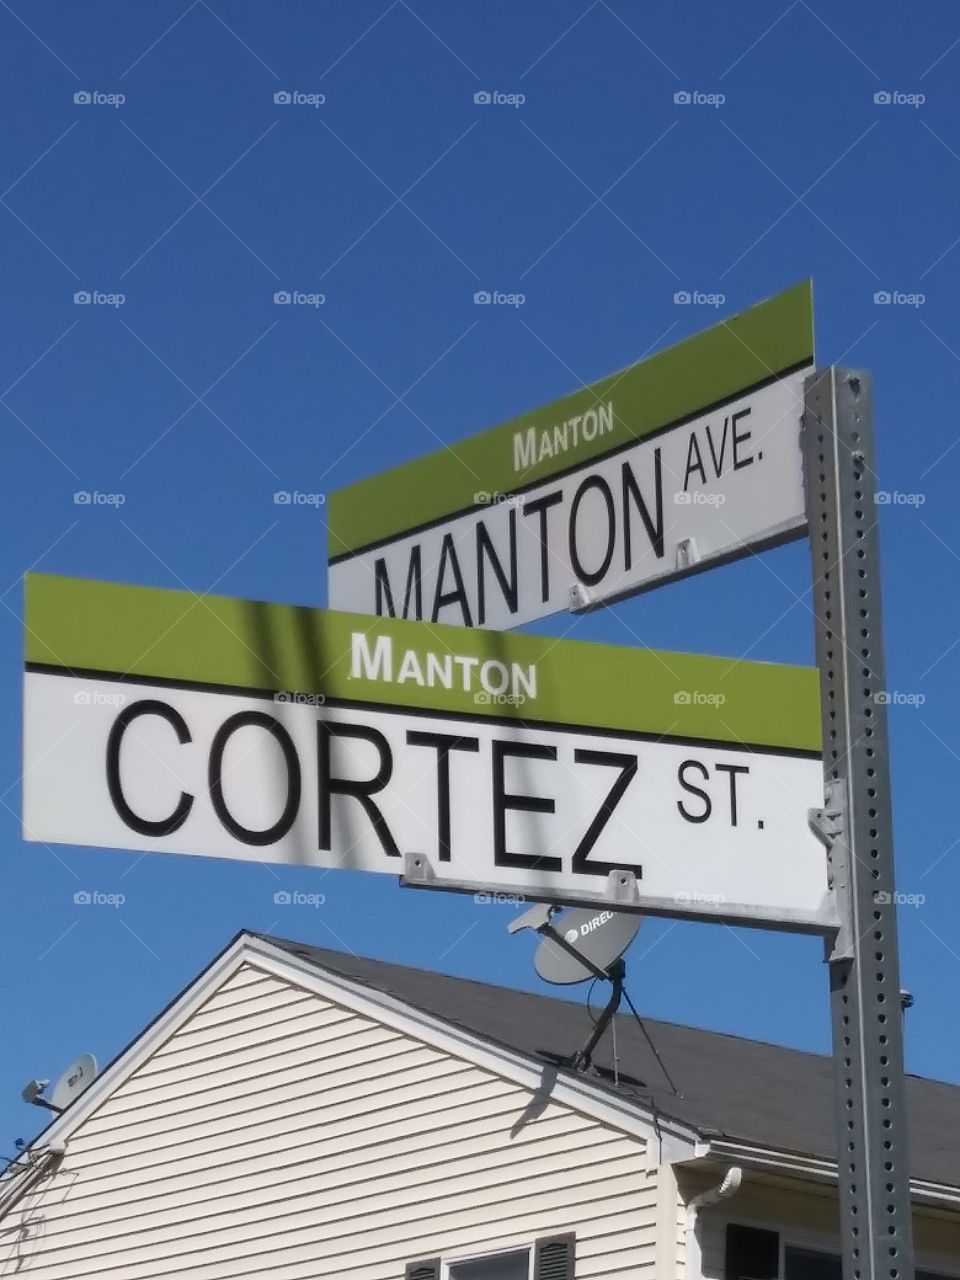 Street signs